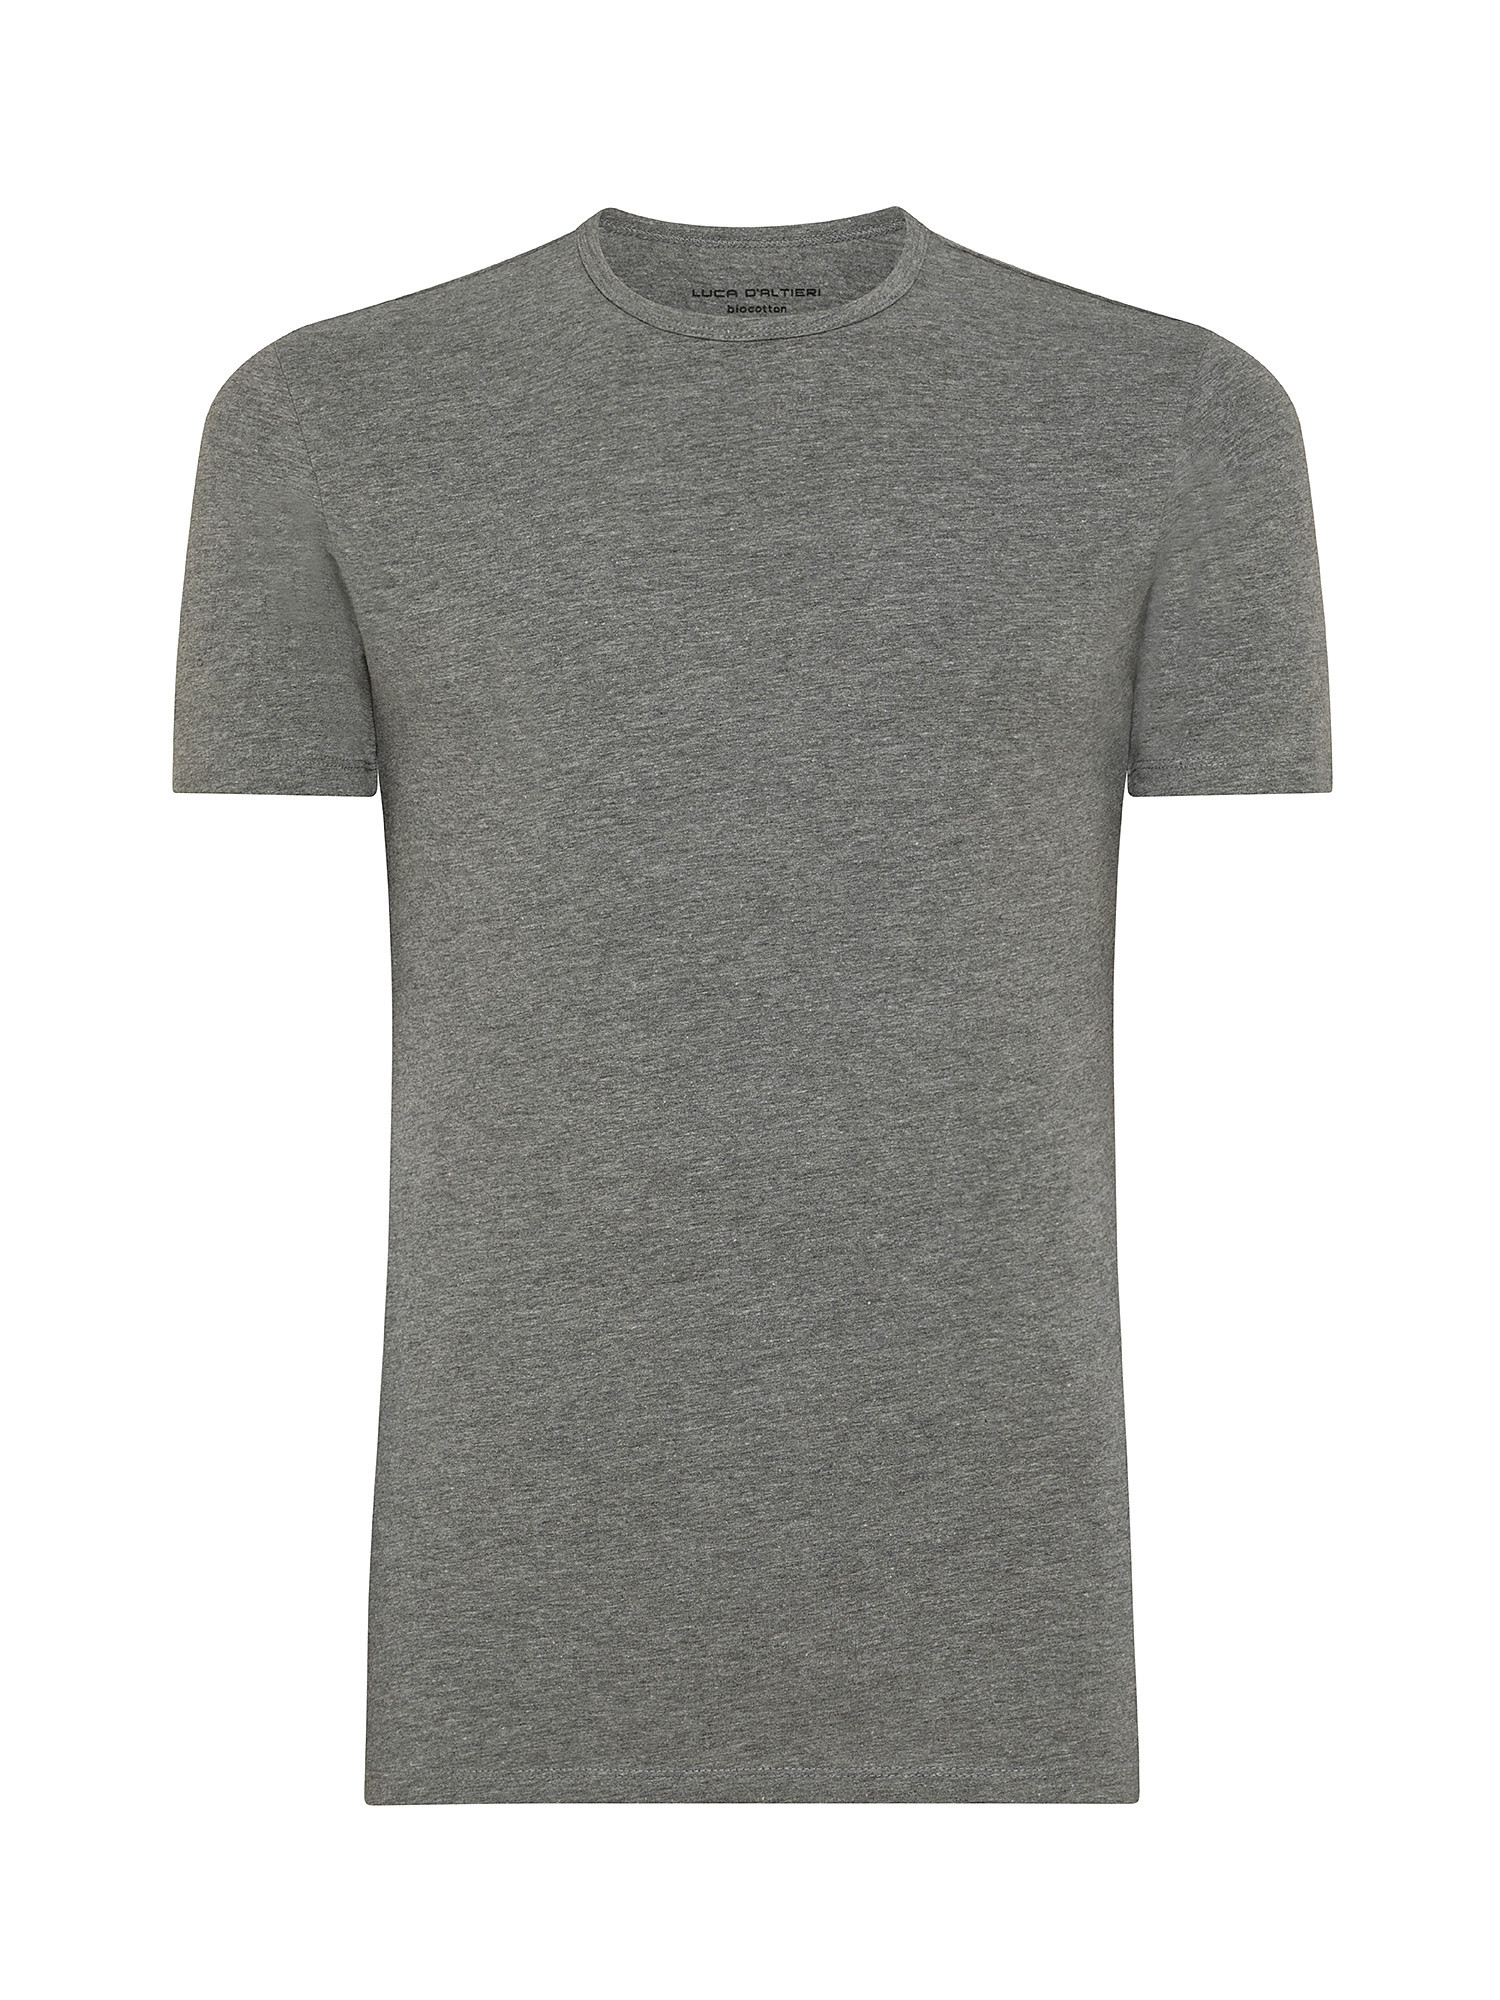 Luca D'Altieri - Set 2 t-shirt, Grigio, large